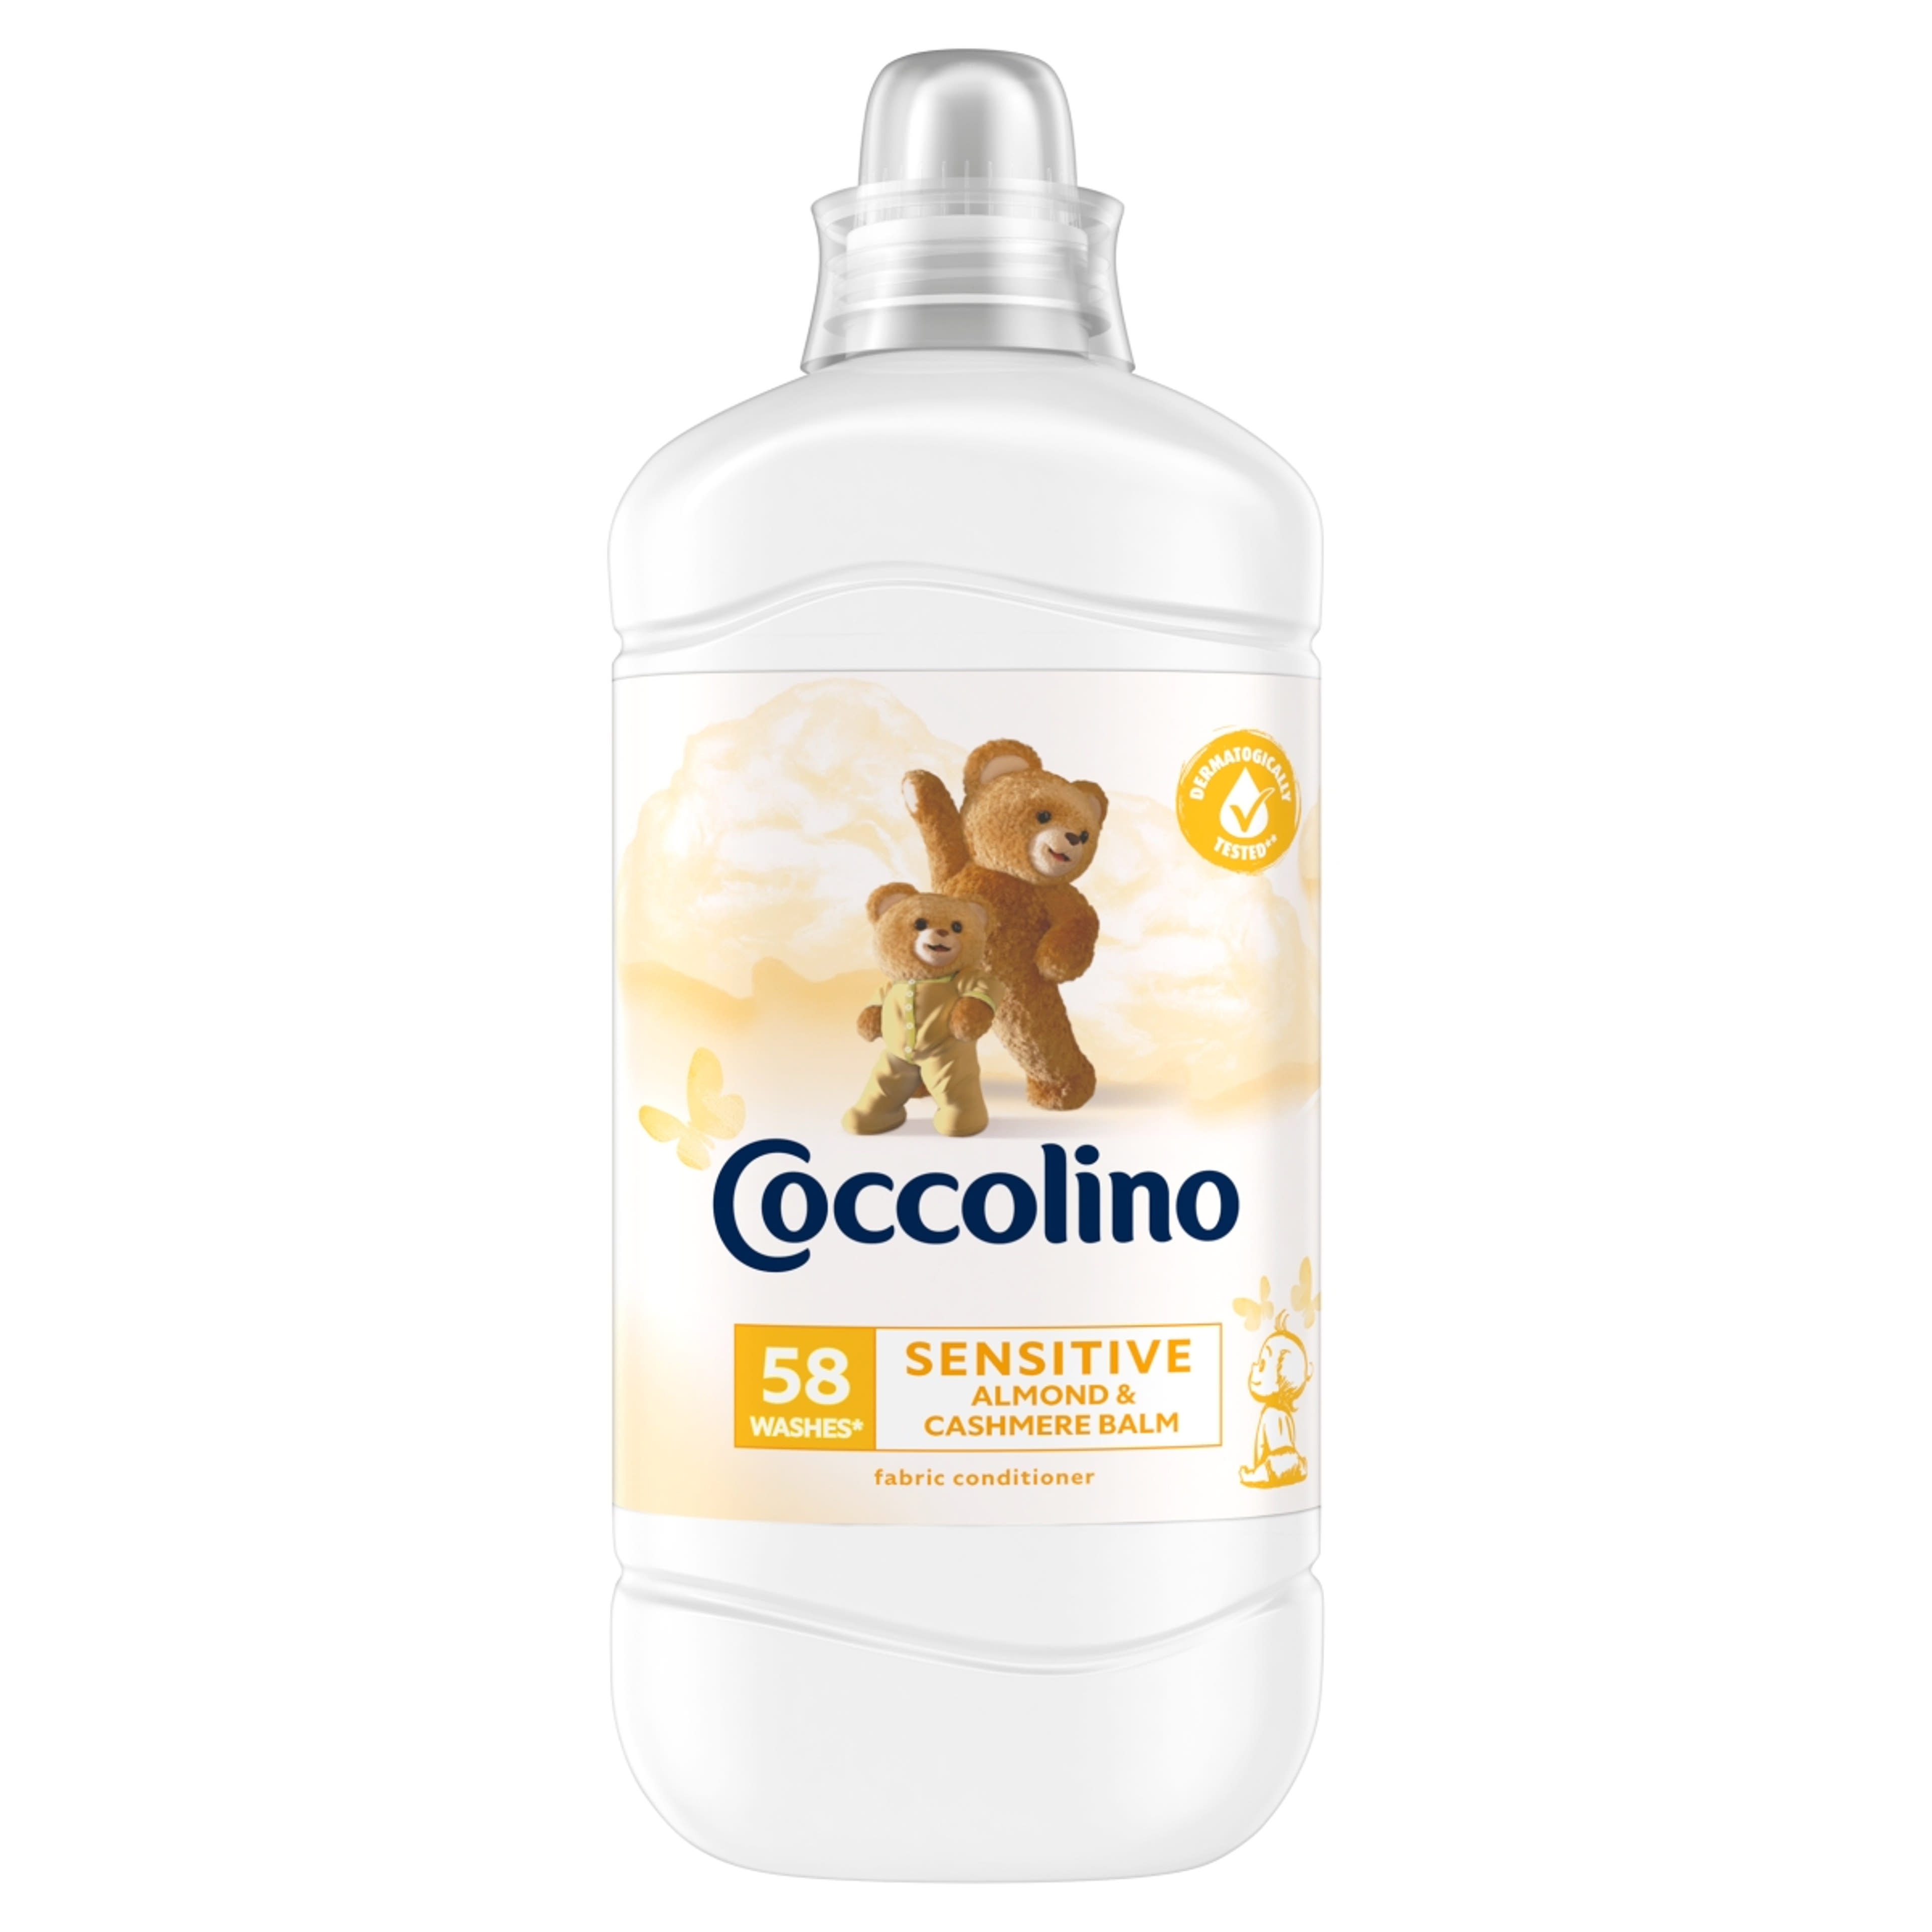 Coccolino Sensitive Almond & Cashmere Balm öblítőkoncentrátum 58 mosás - 1450 ml-1